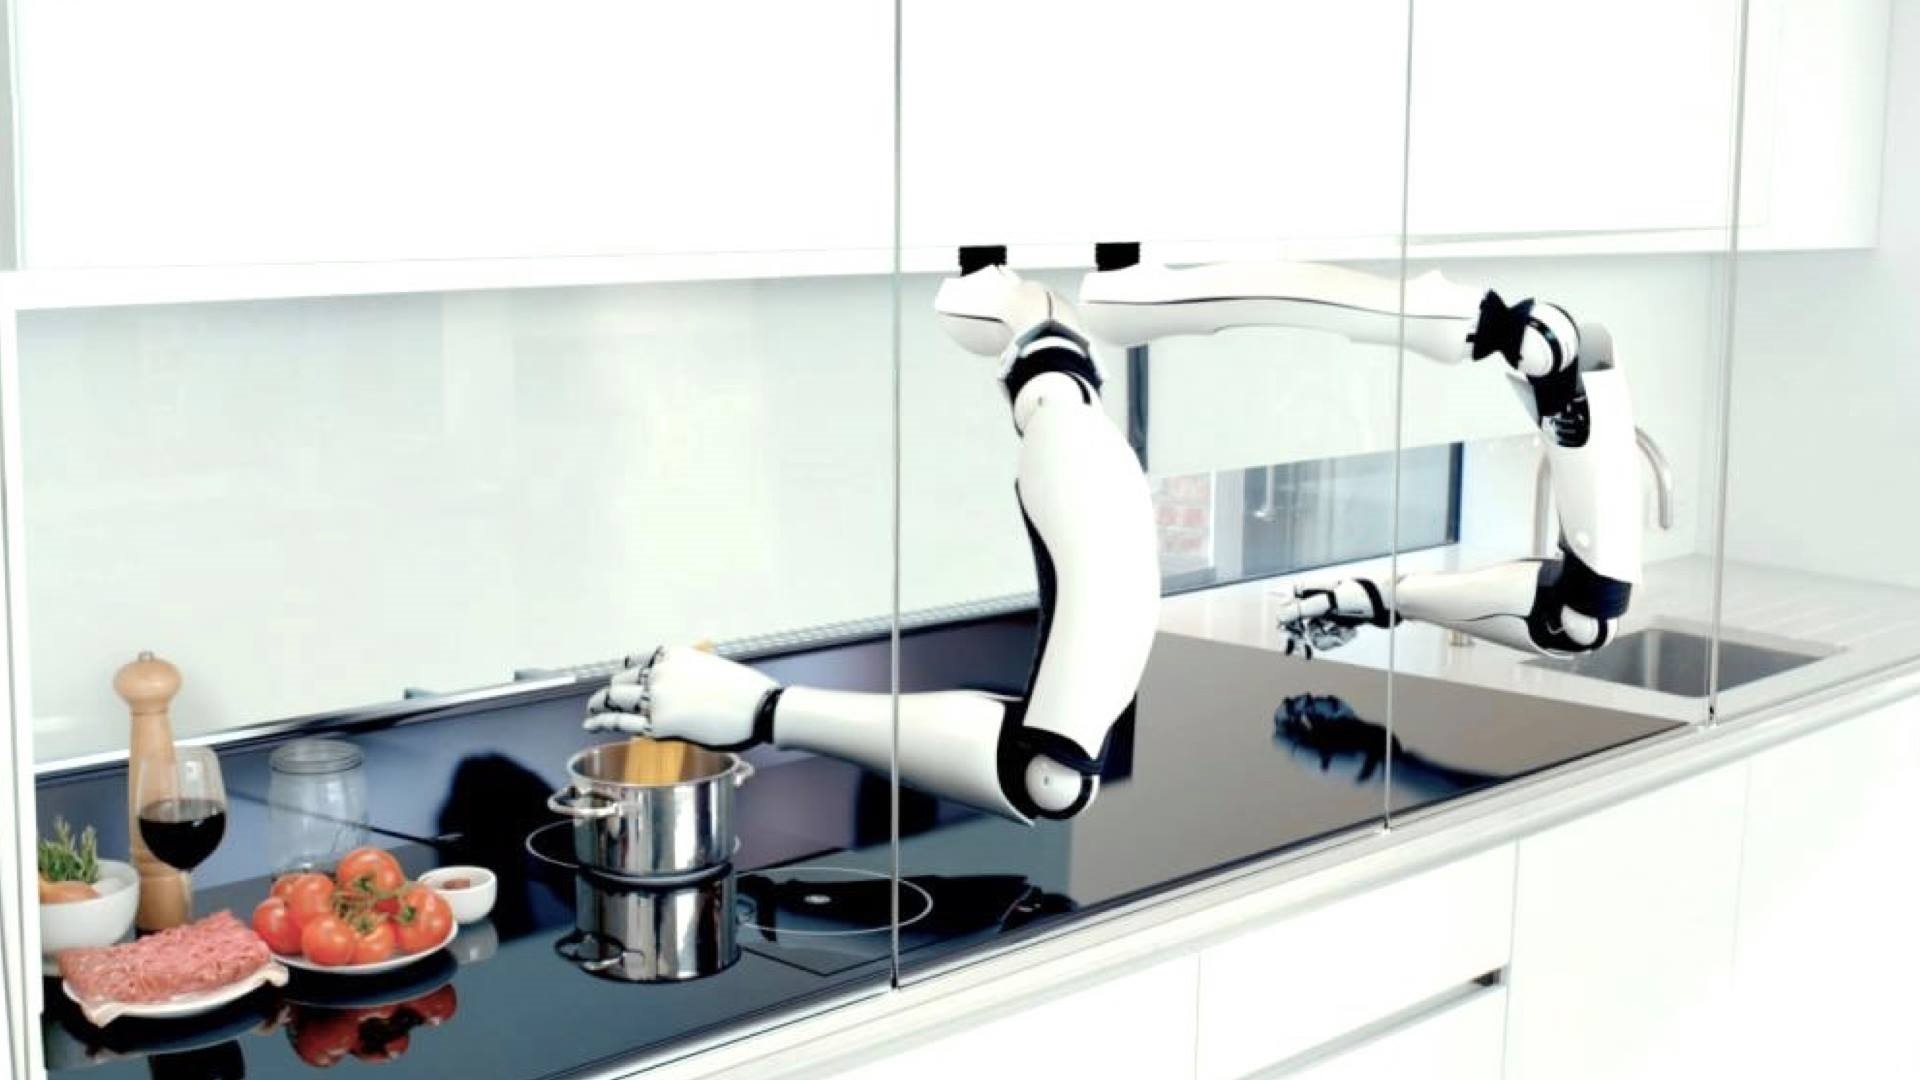 A robot chef.